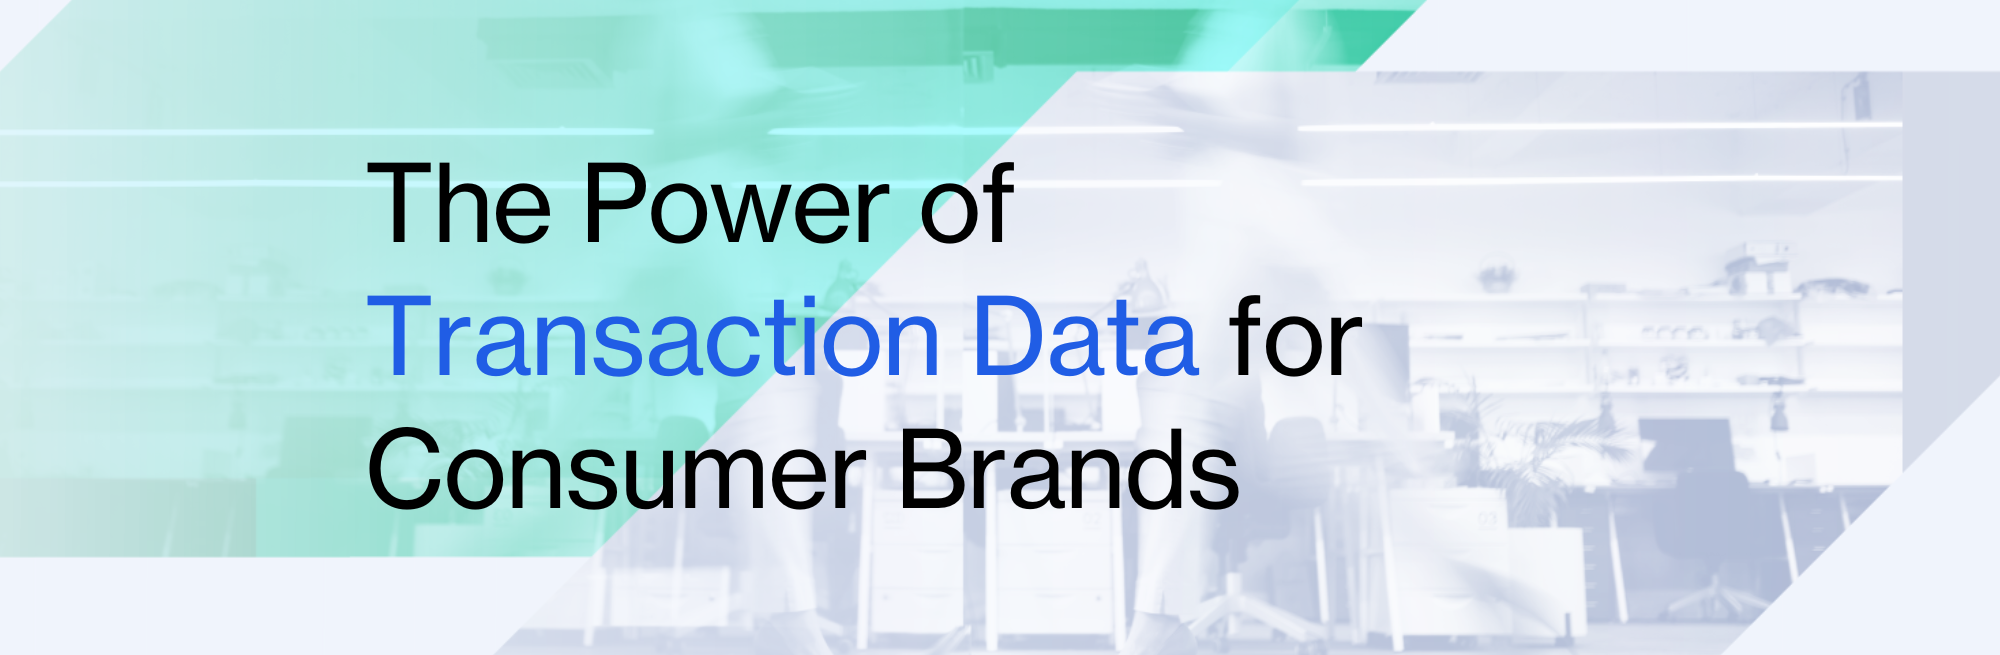 The Power of Transaction Data for Consumer Brands